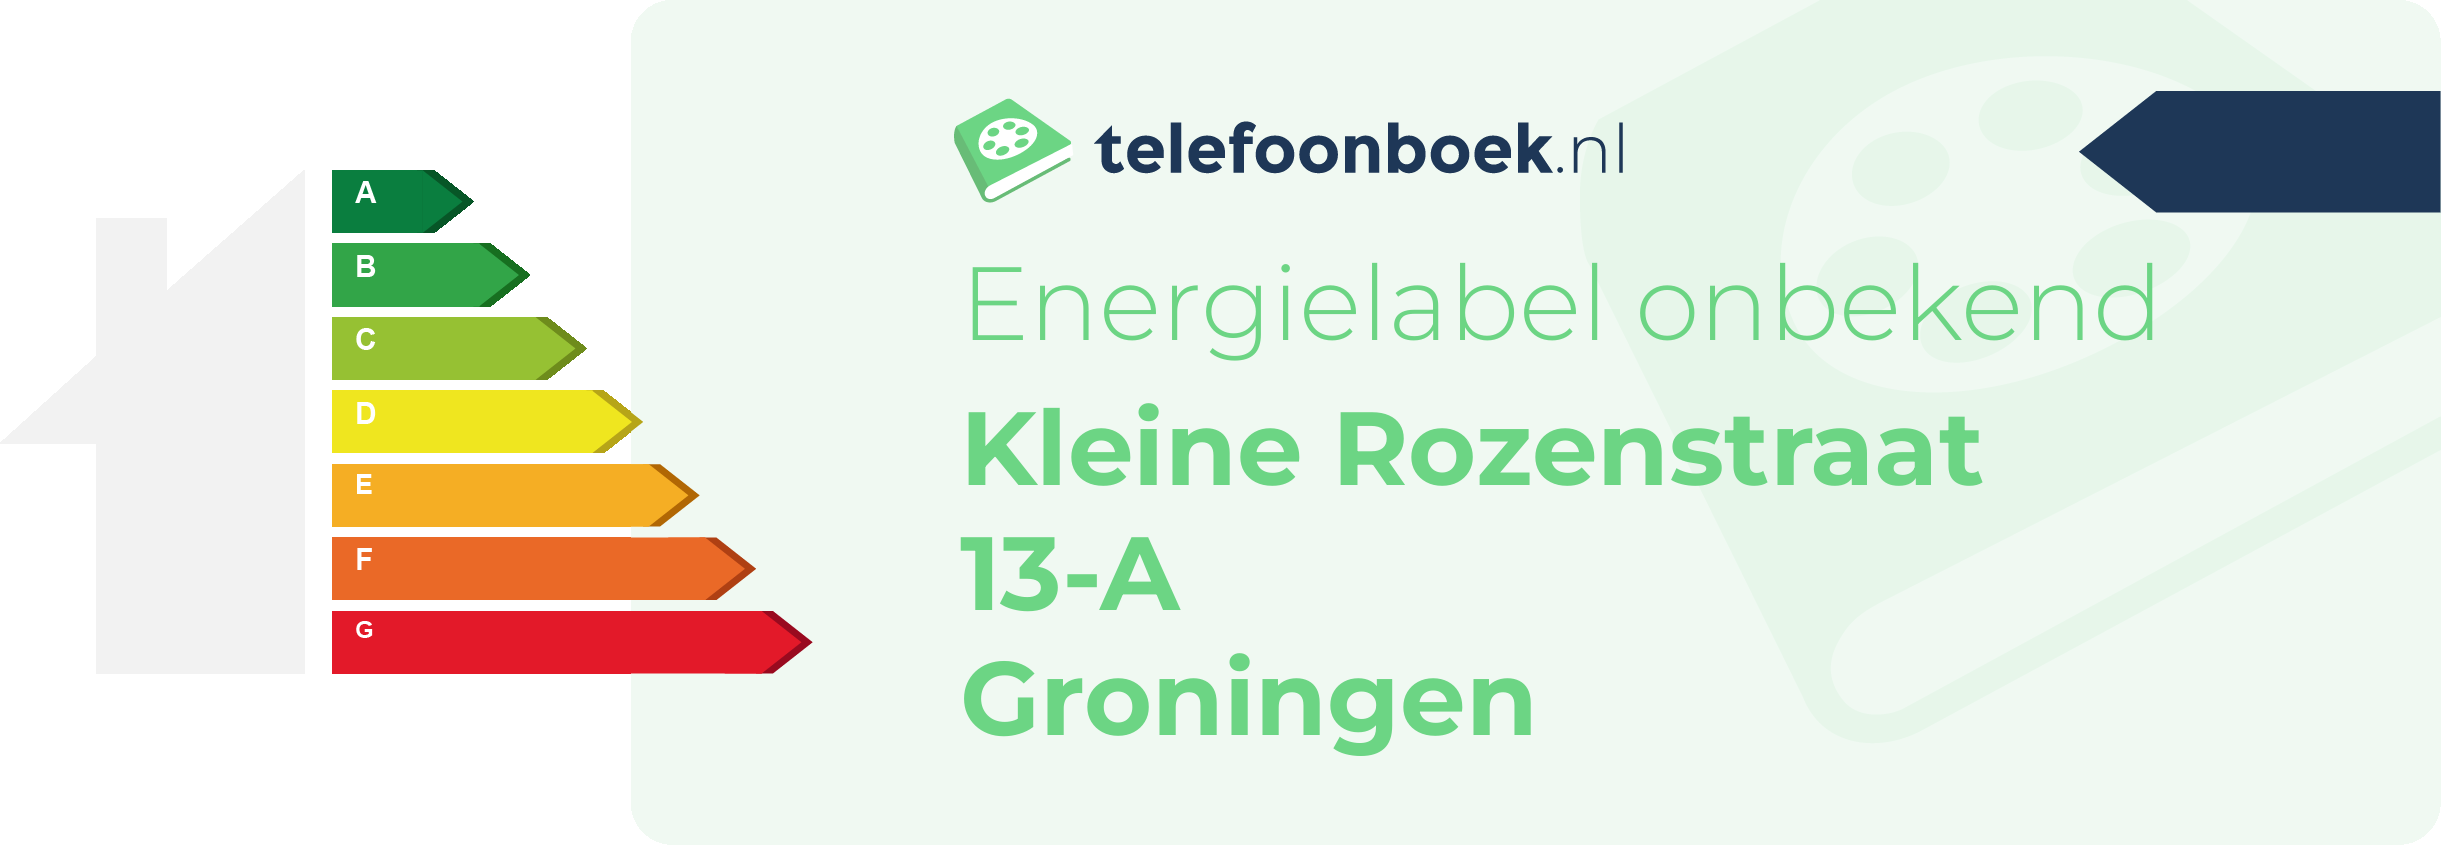 Energielabel Kleine Rozenstraat 13-A Groningen